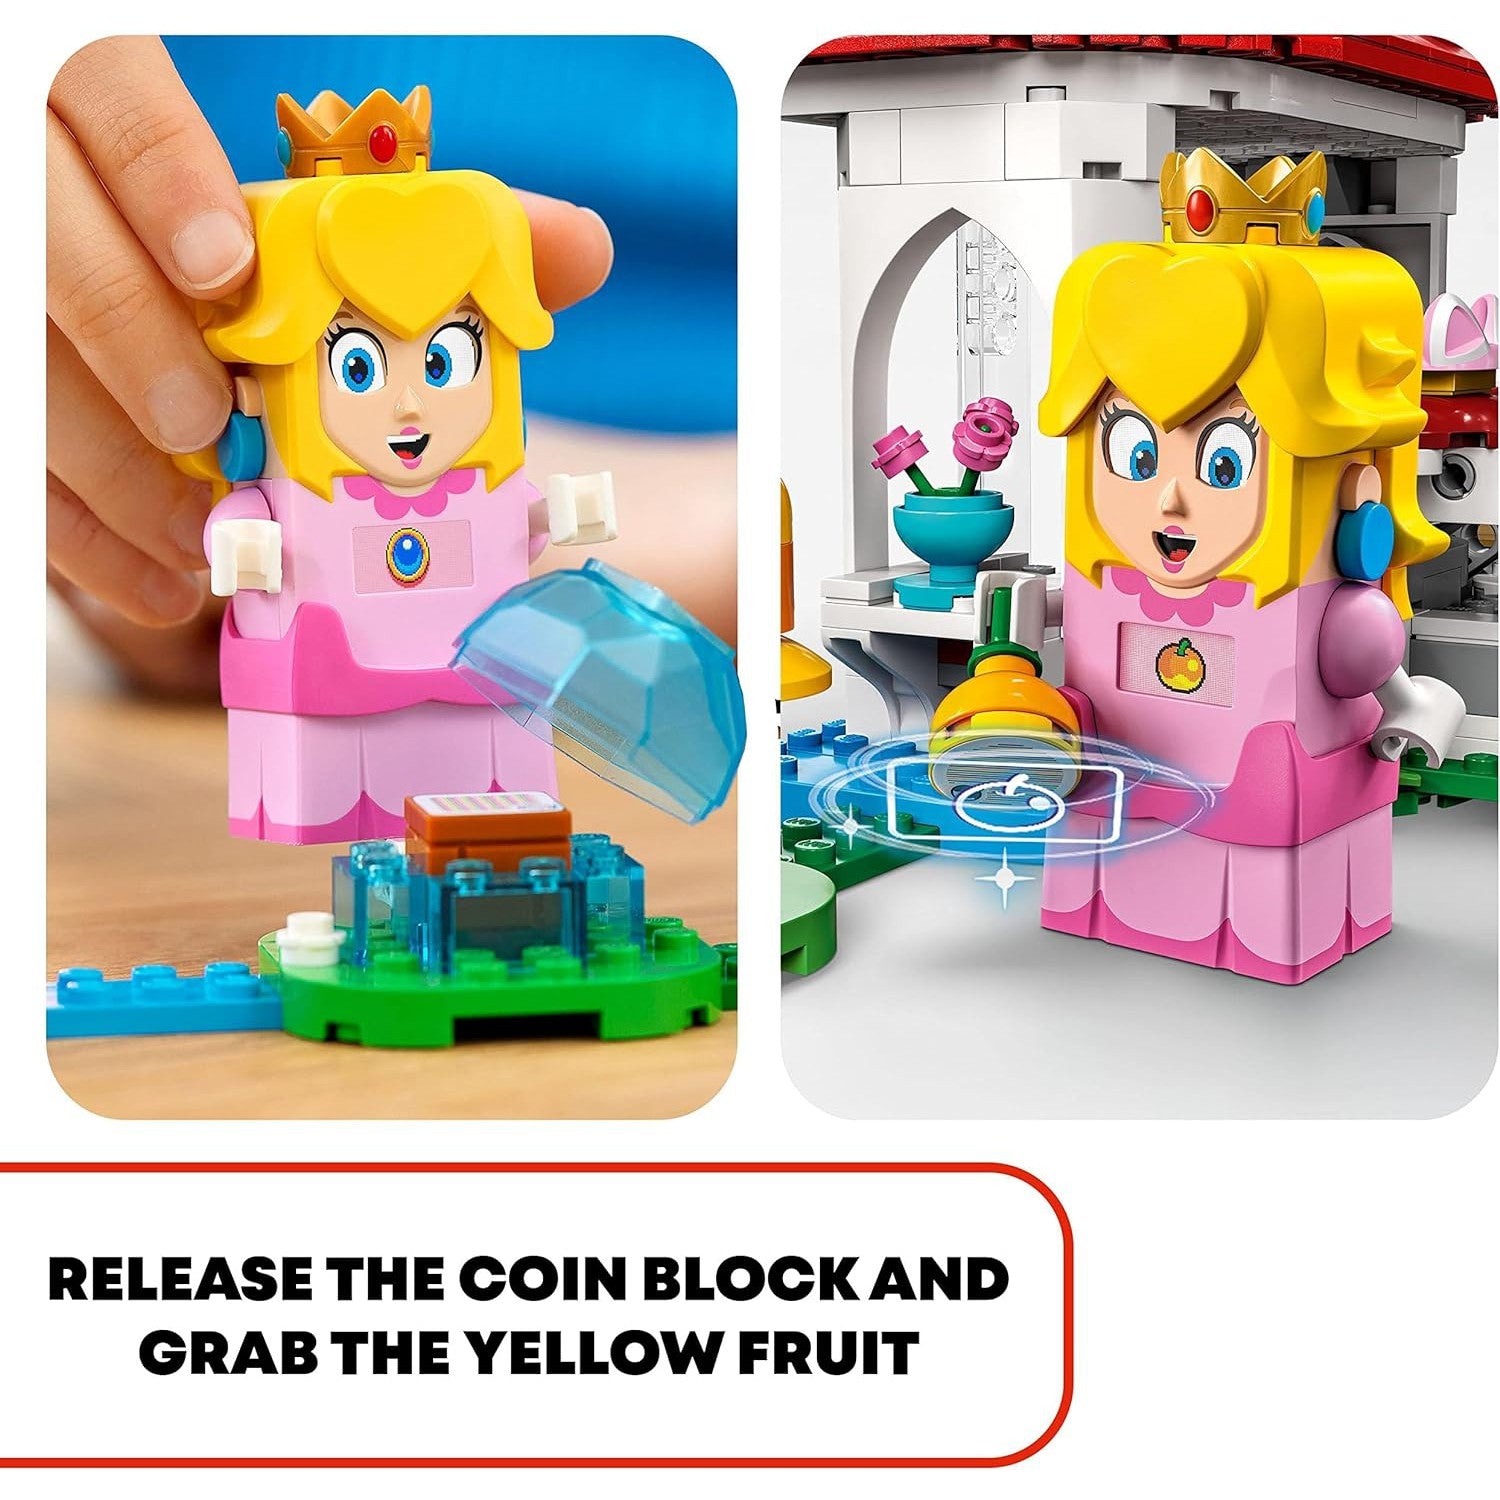 Lego 71407 Super Mario Cat Peach Suit and Frozen Tower Expansion Set